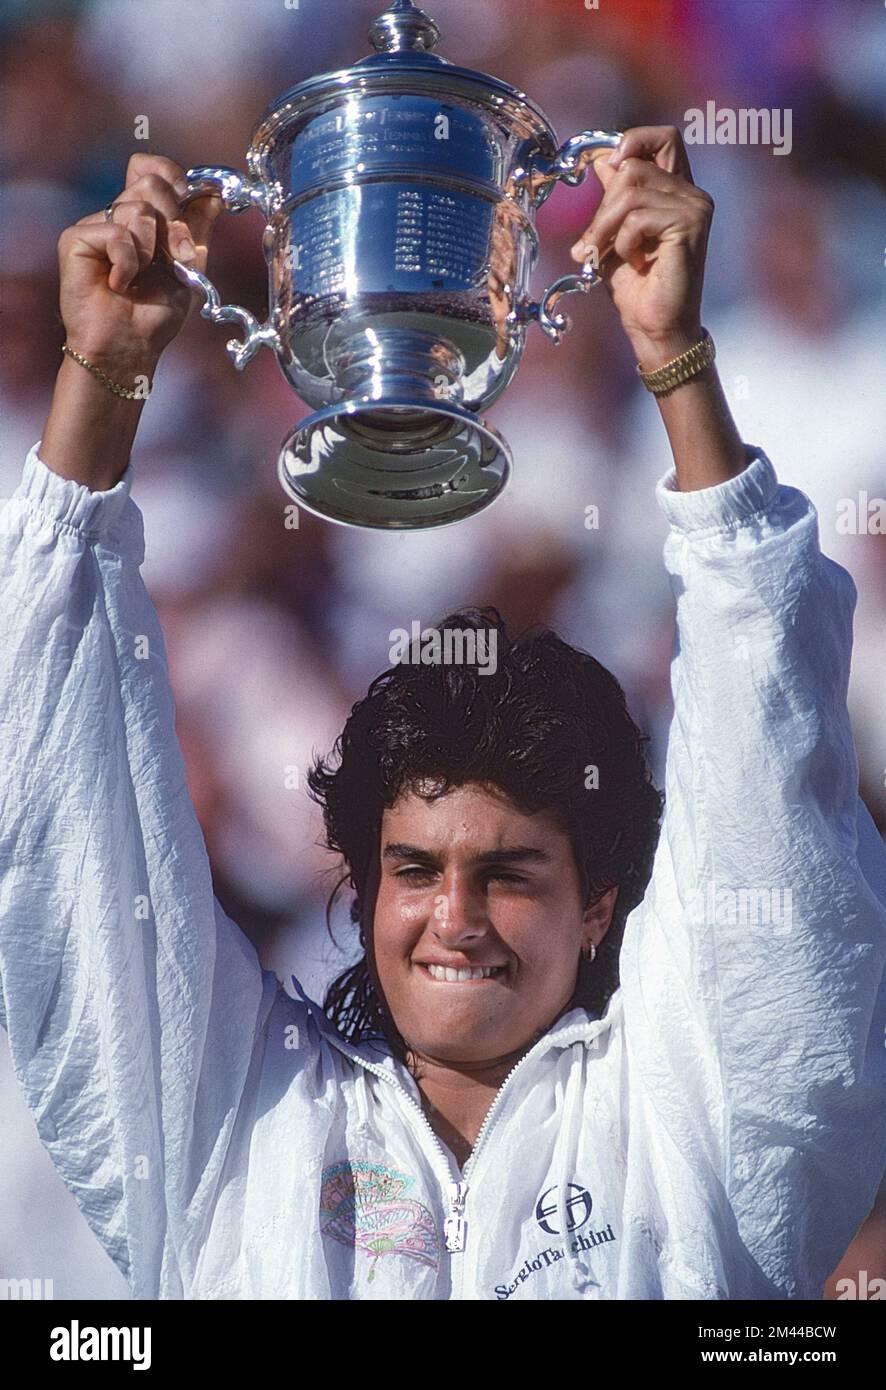 TENNIS GABRIELA SABATINI Champion US Open 1990 - Tenis Tie Break